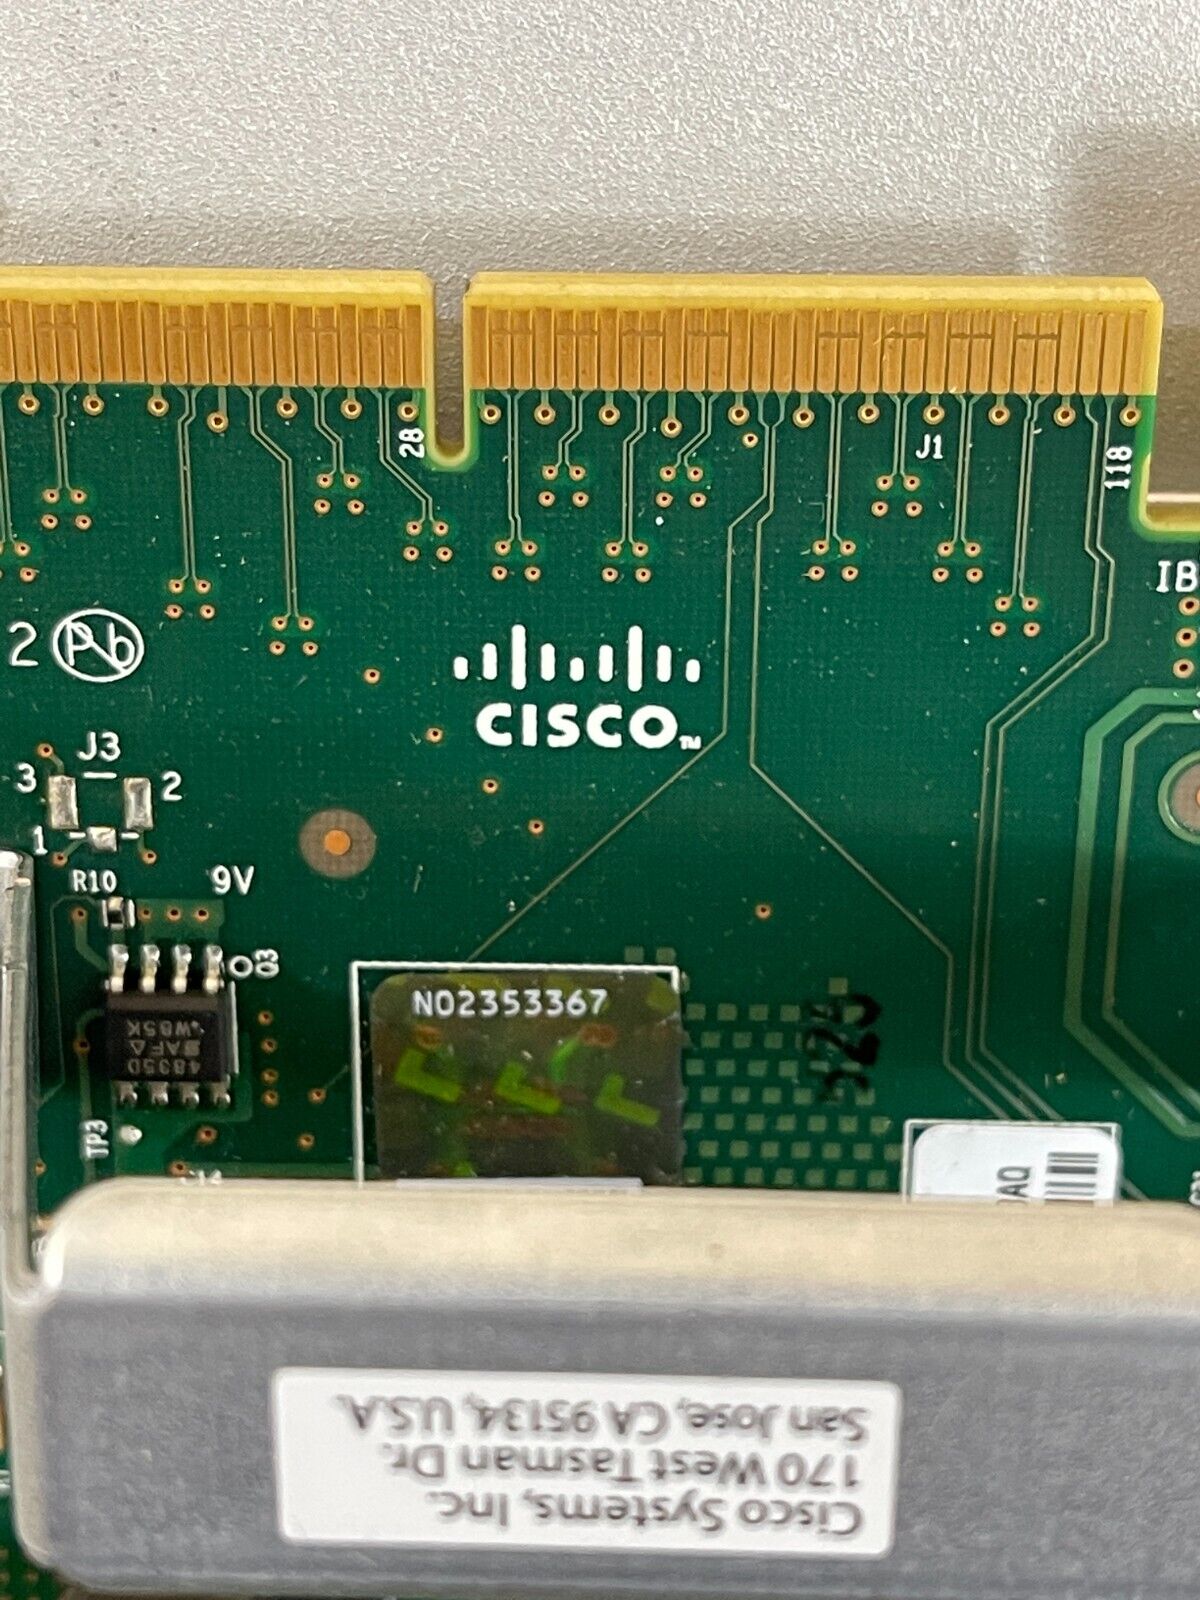 Cisco Catalyst 9300 Network Module 8x 10GbE SFP+ C9300-NM-8X V01 V02